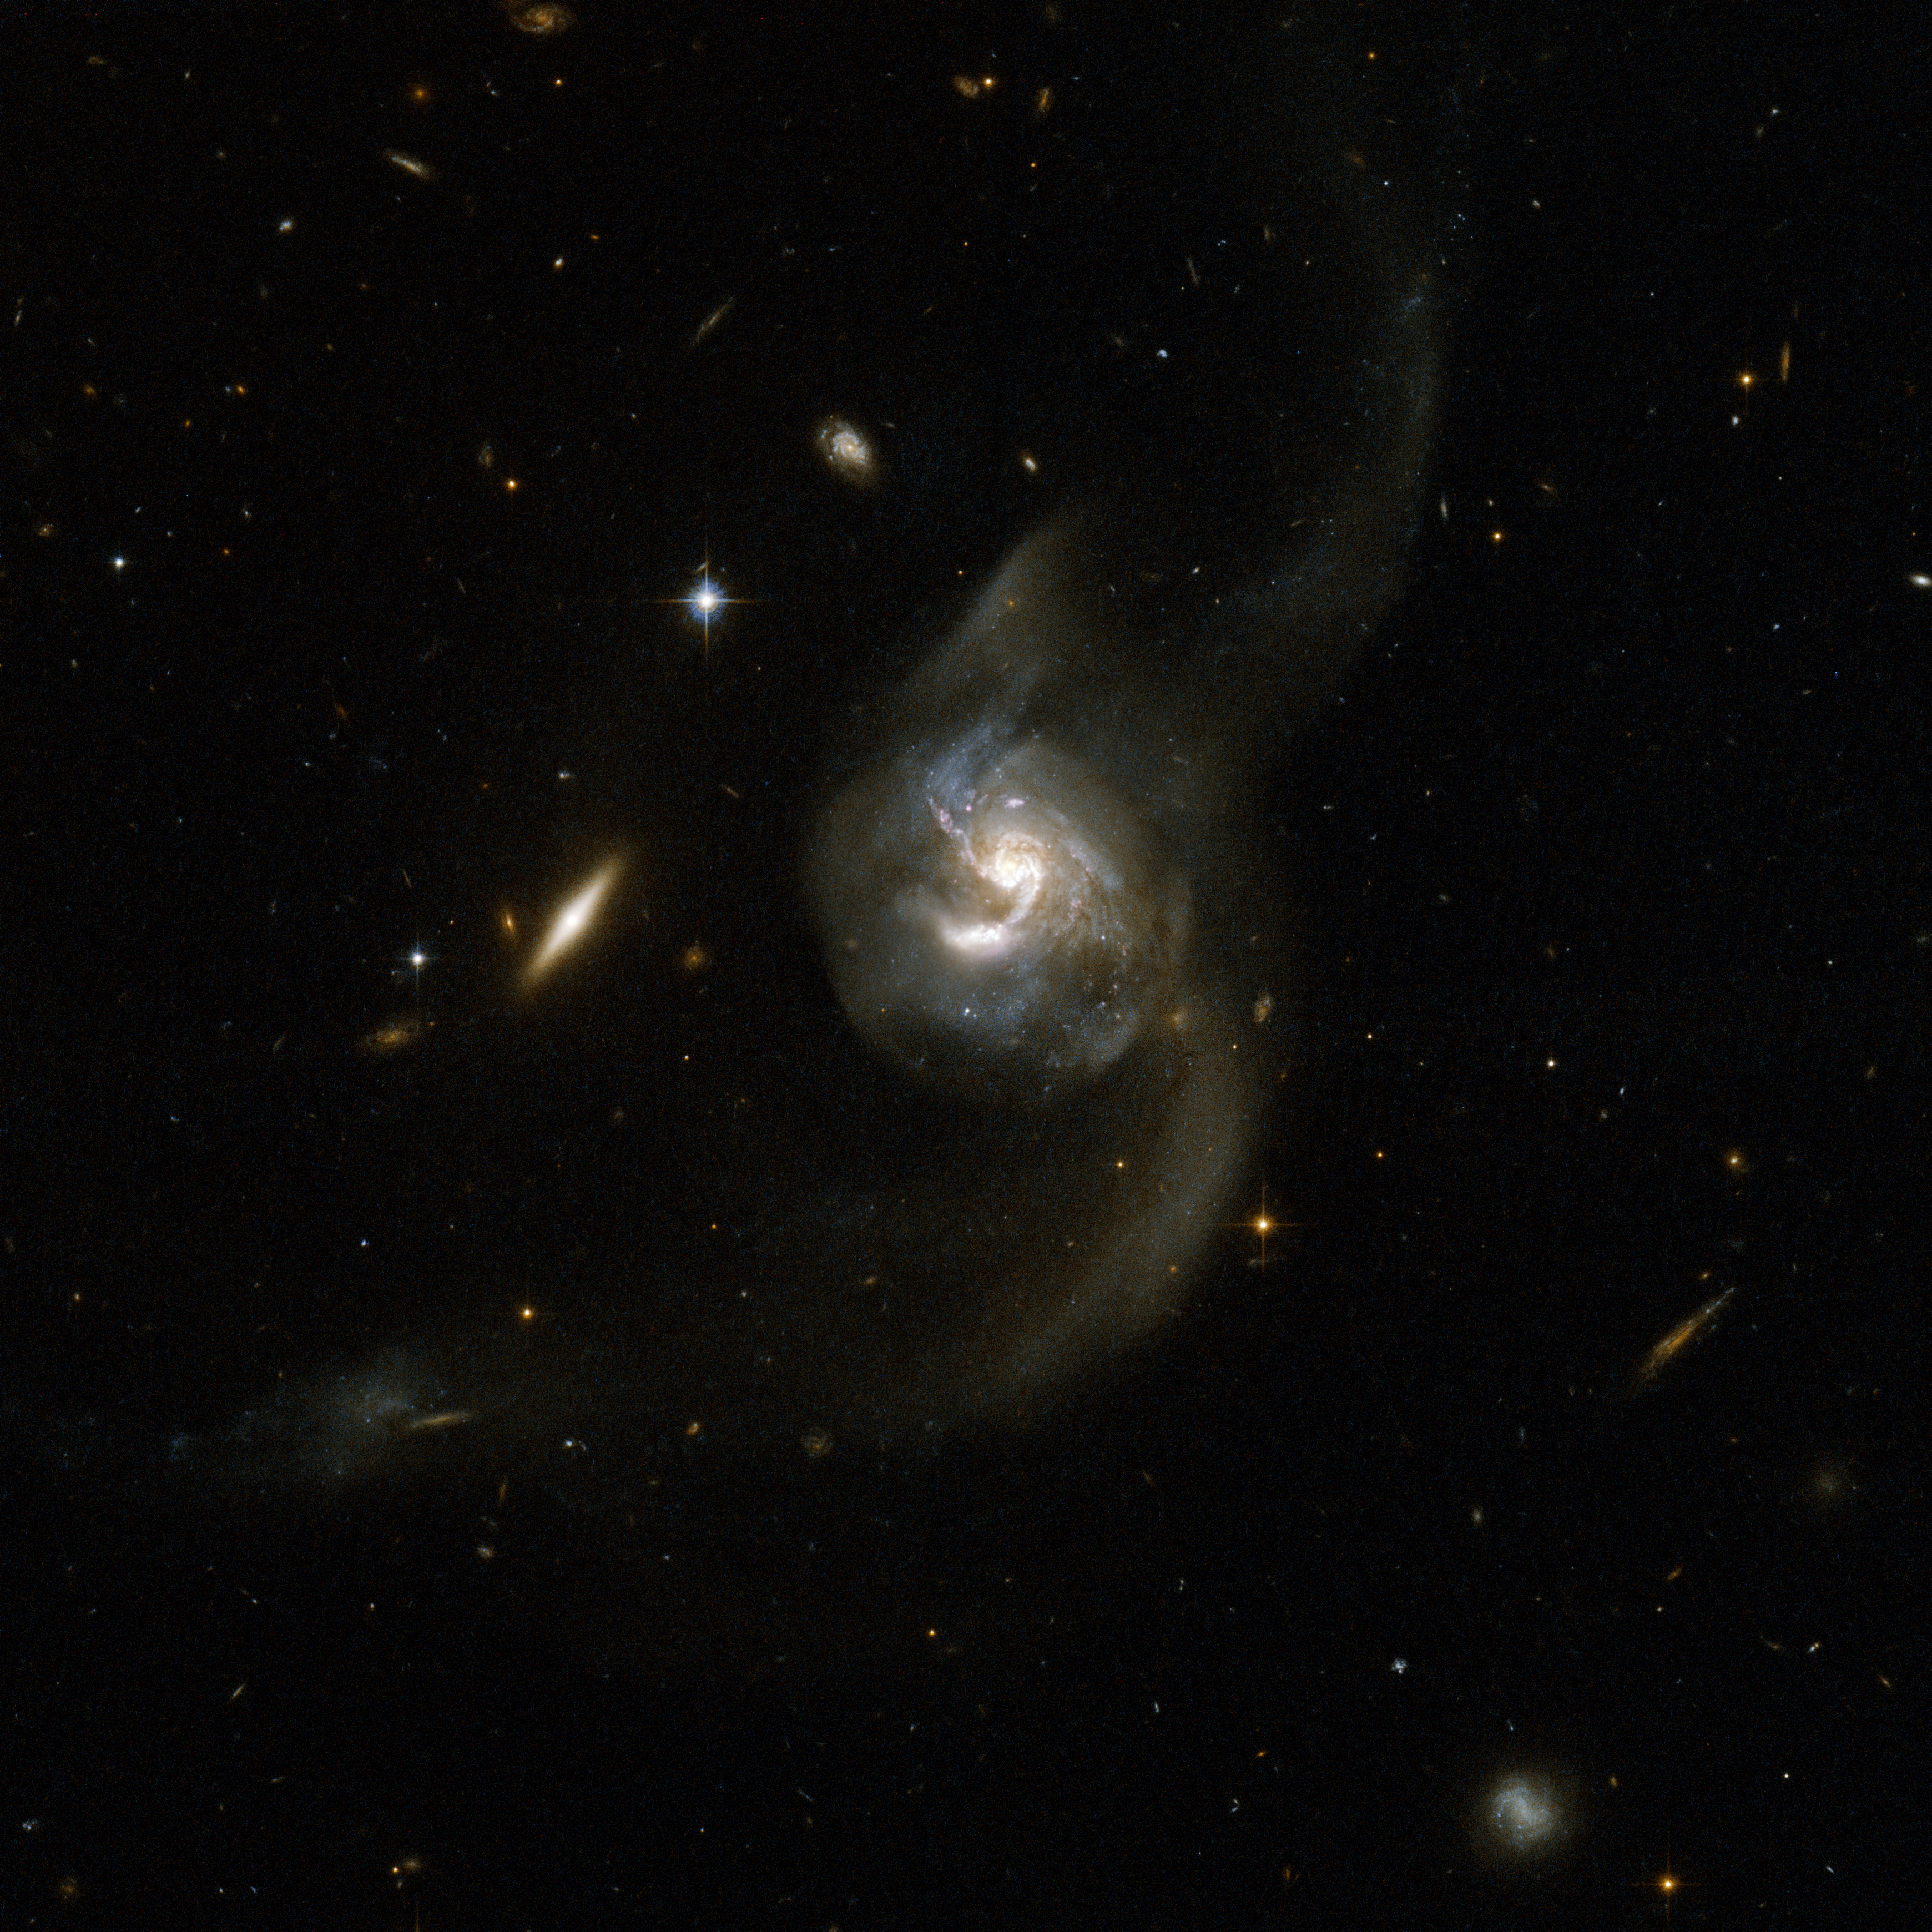 INTERACTING GALAXY NGC 3256 HUBBLE TELESCOPE 11x14 SILVER HALIDE PHOTO PRINT 